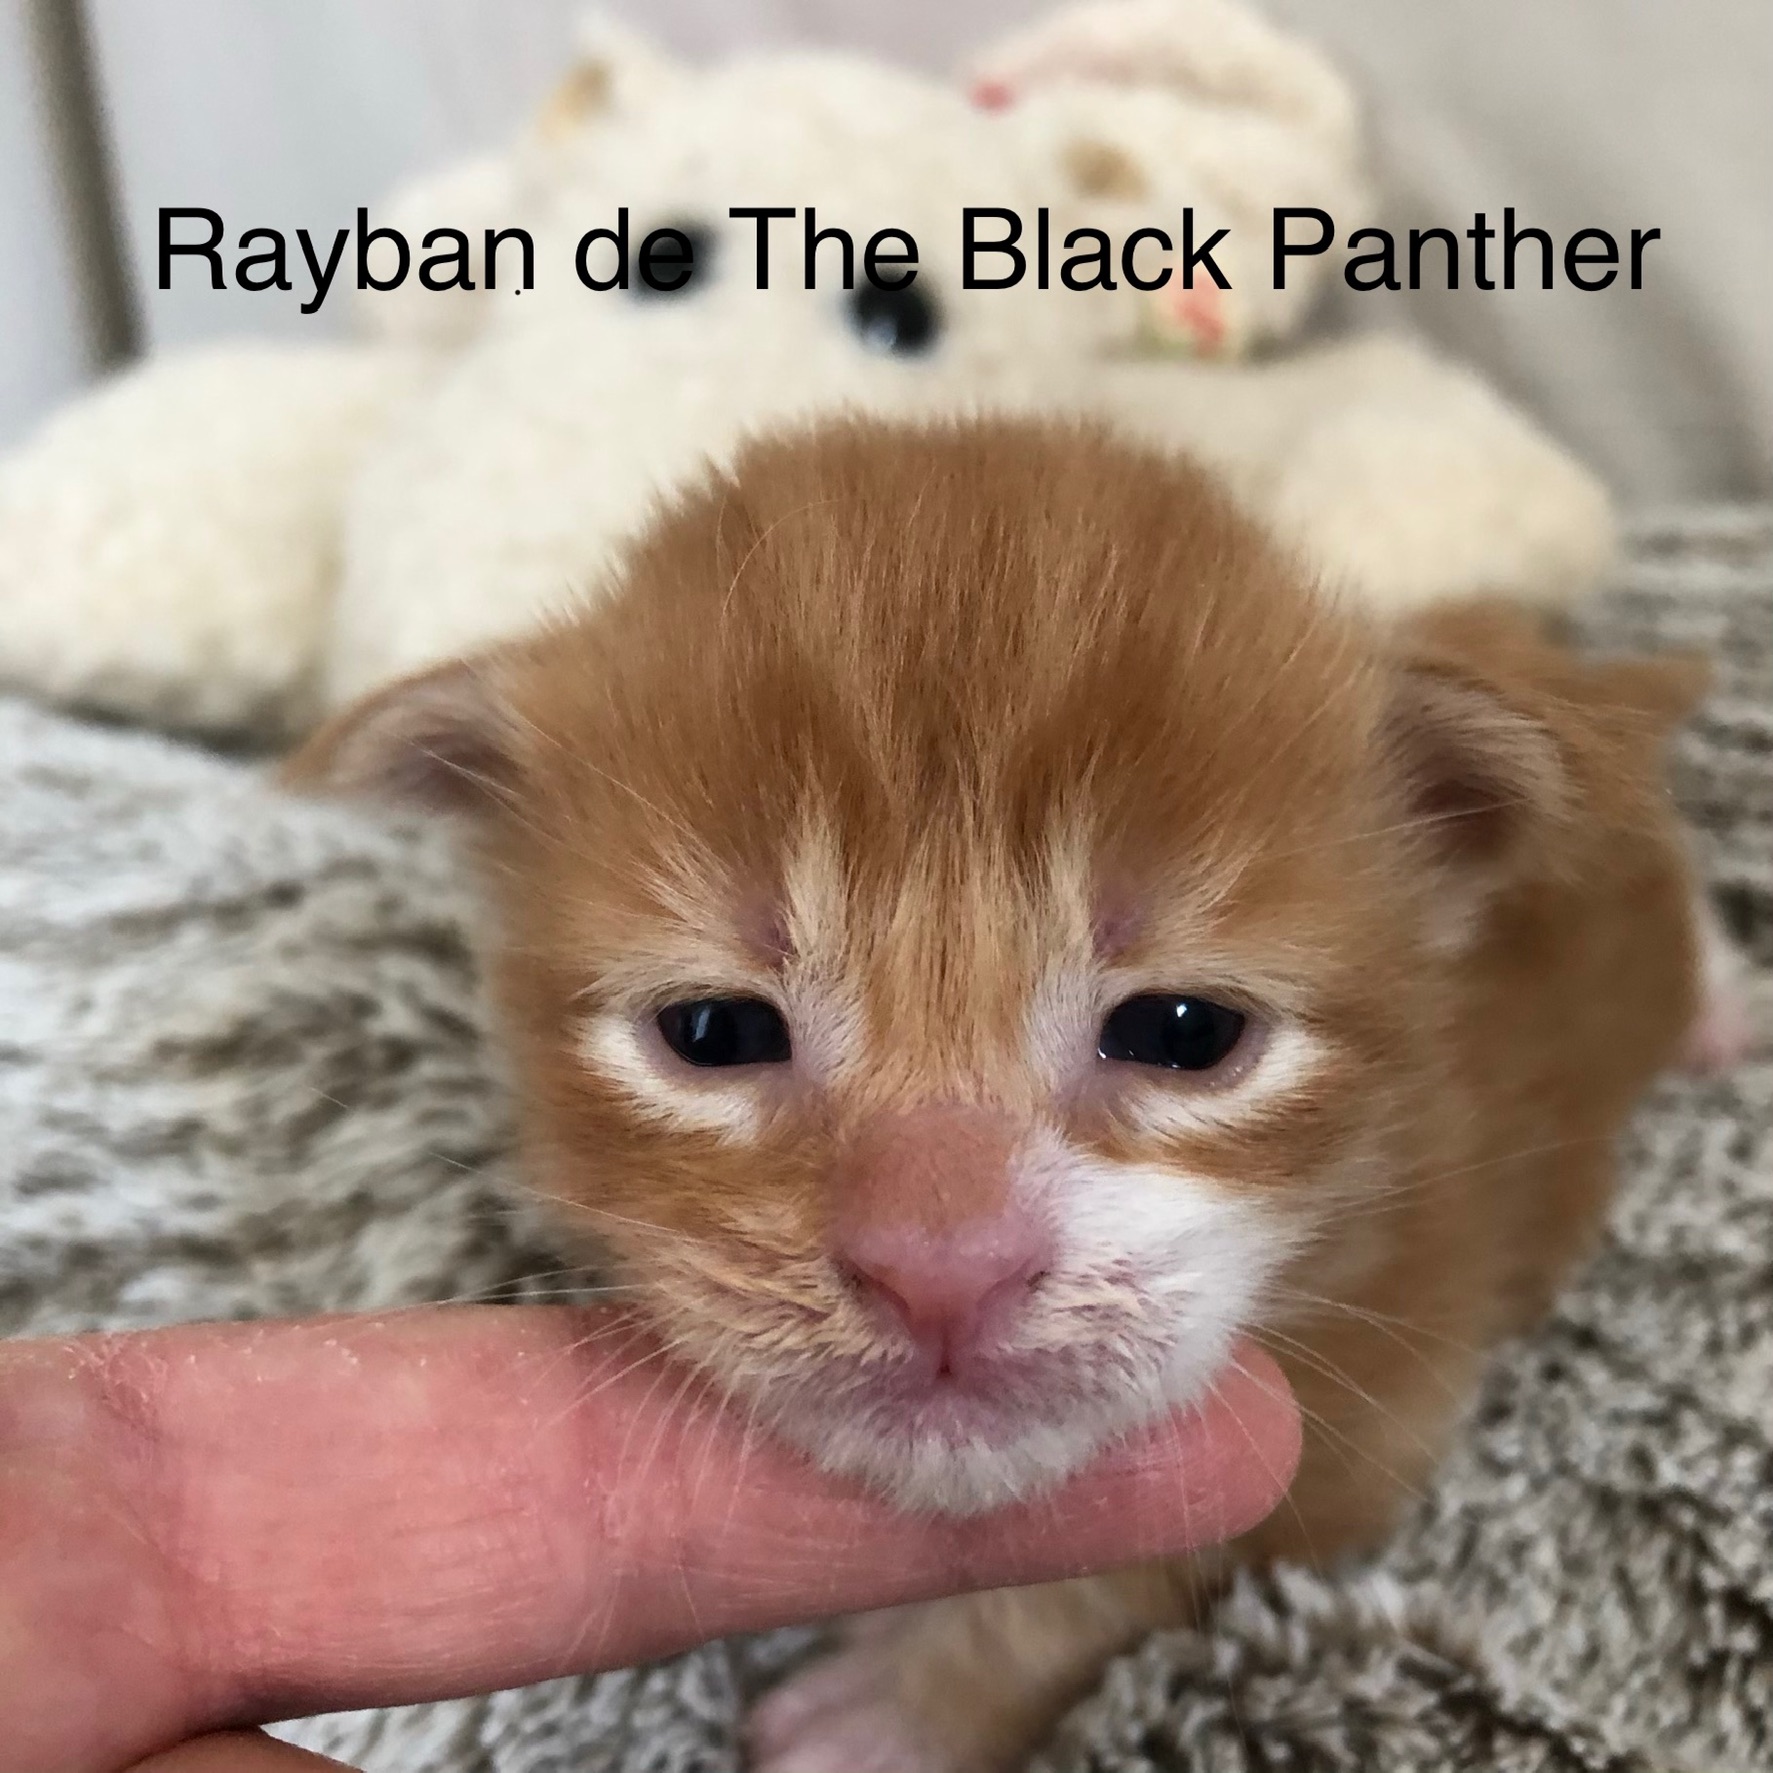 Rayban de The Black Panther